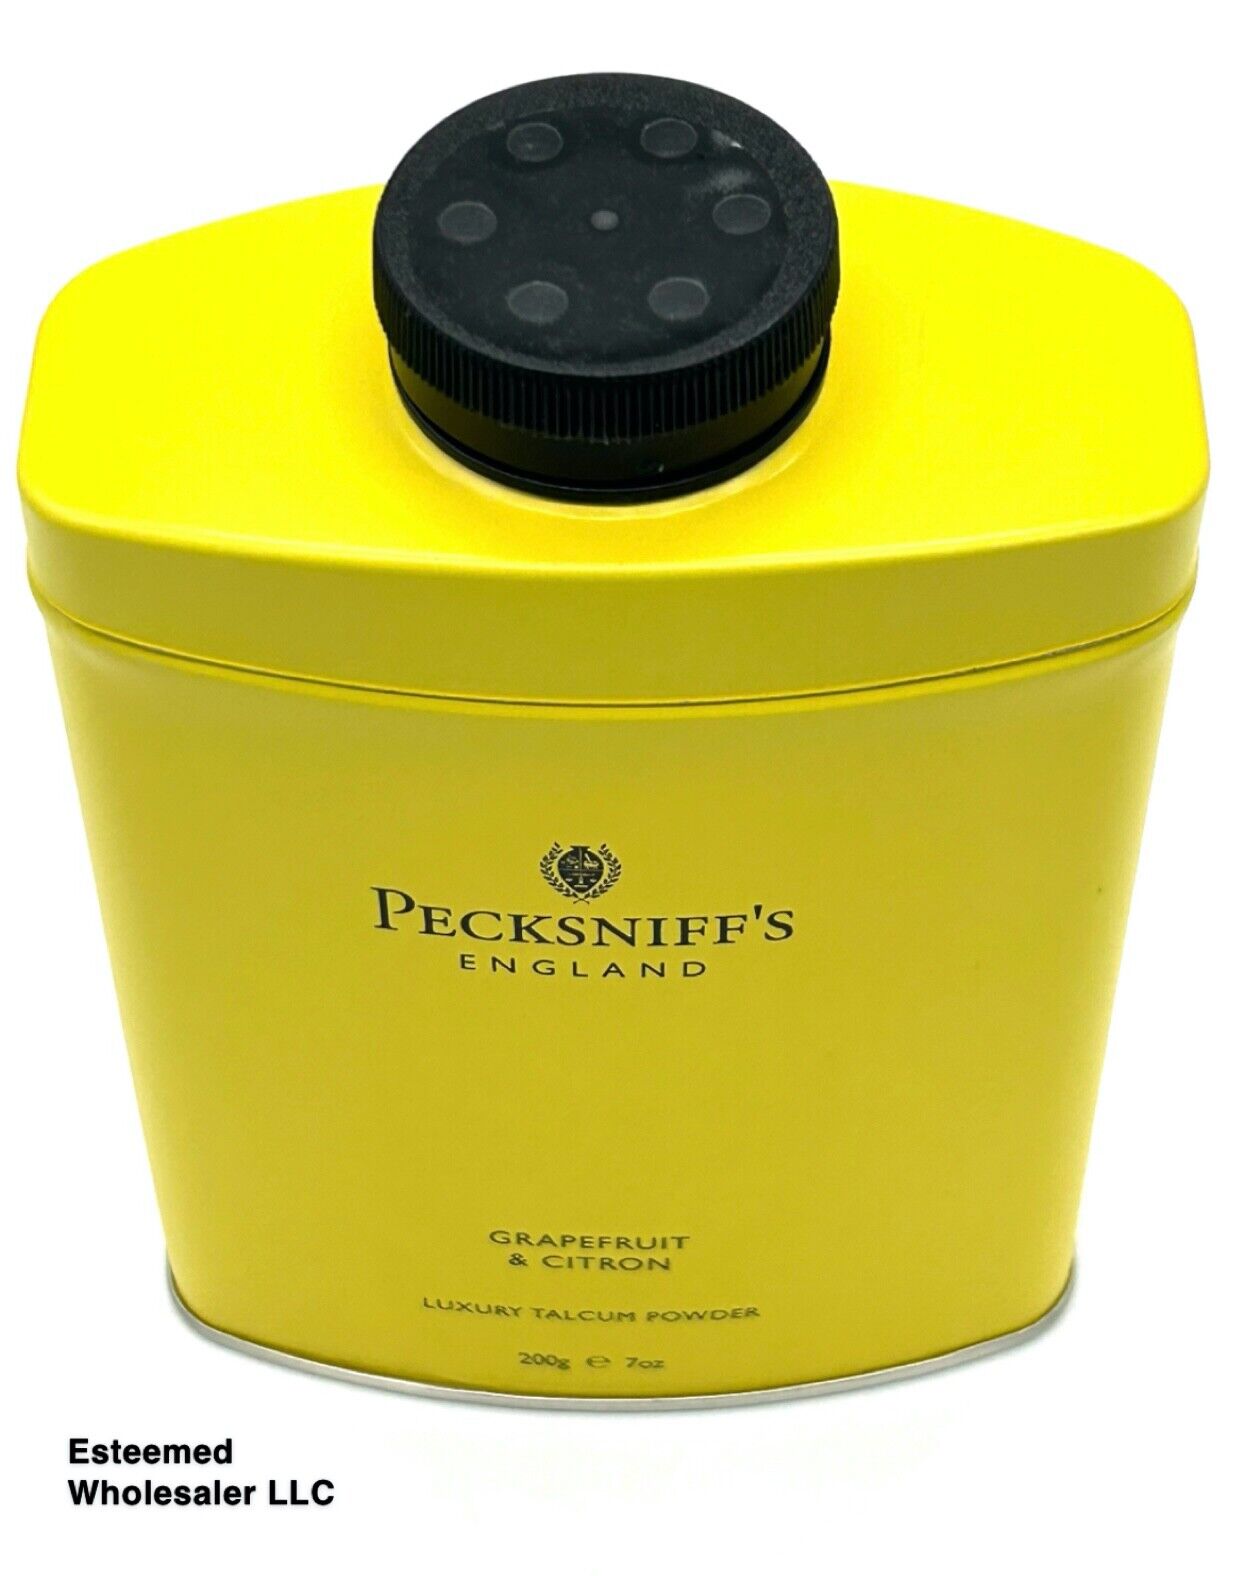 PECKSNIFFS England Luxury Talcum Powder Grapefruit & Citron 7oz w/o box